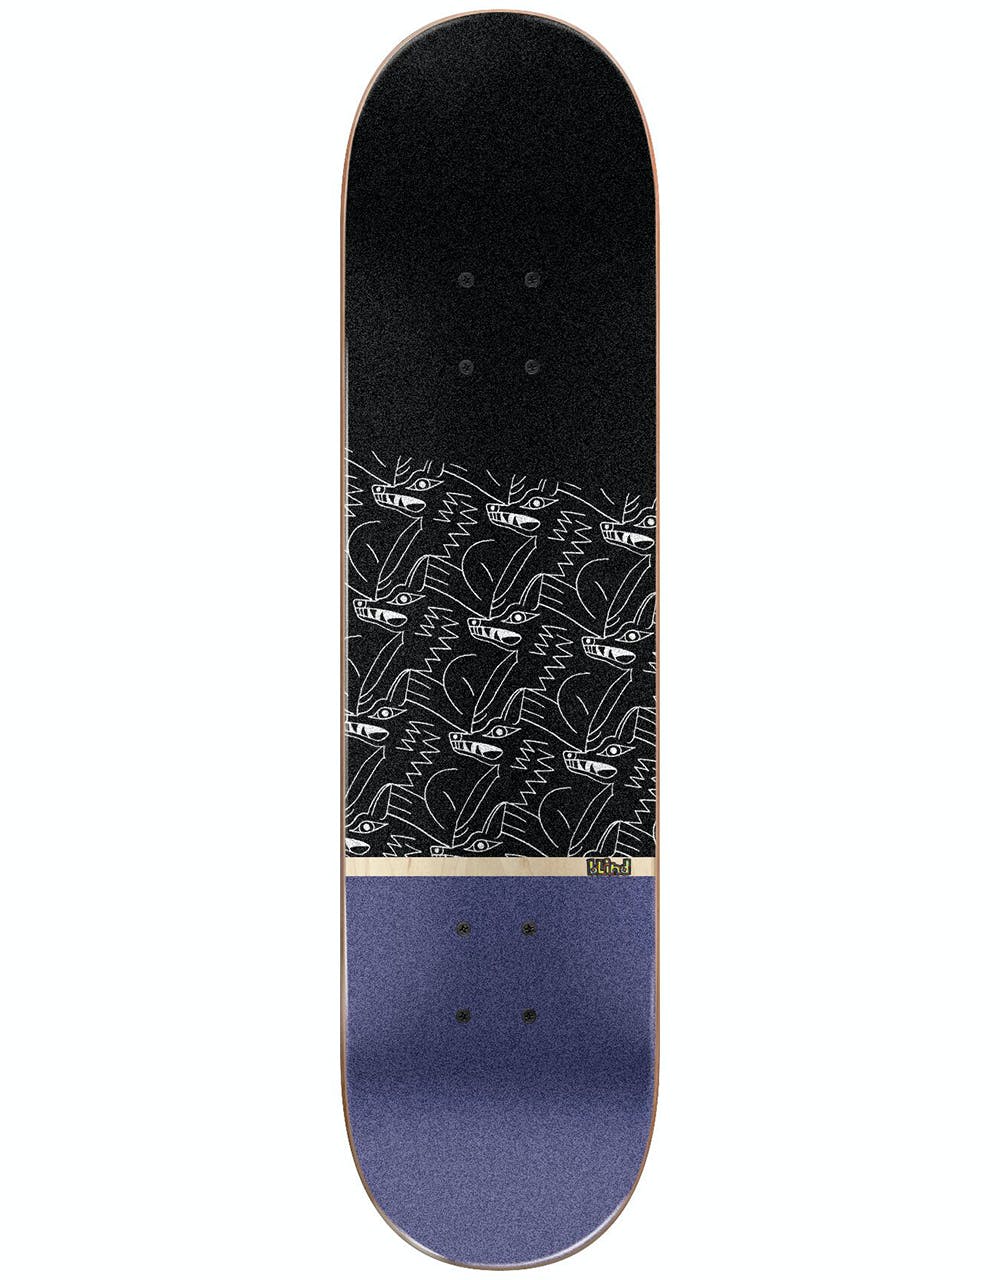 Blind Tile Style Premium Complete Skateboard - 7.75"